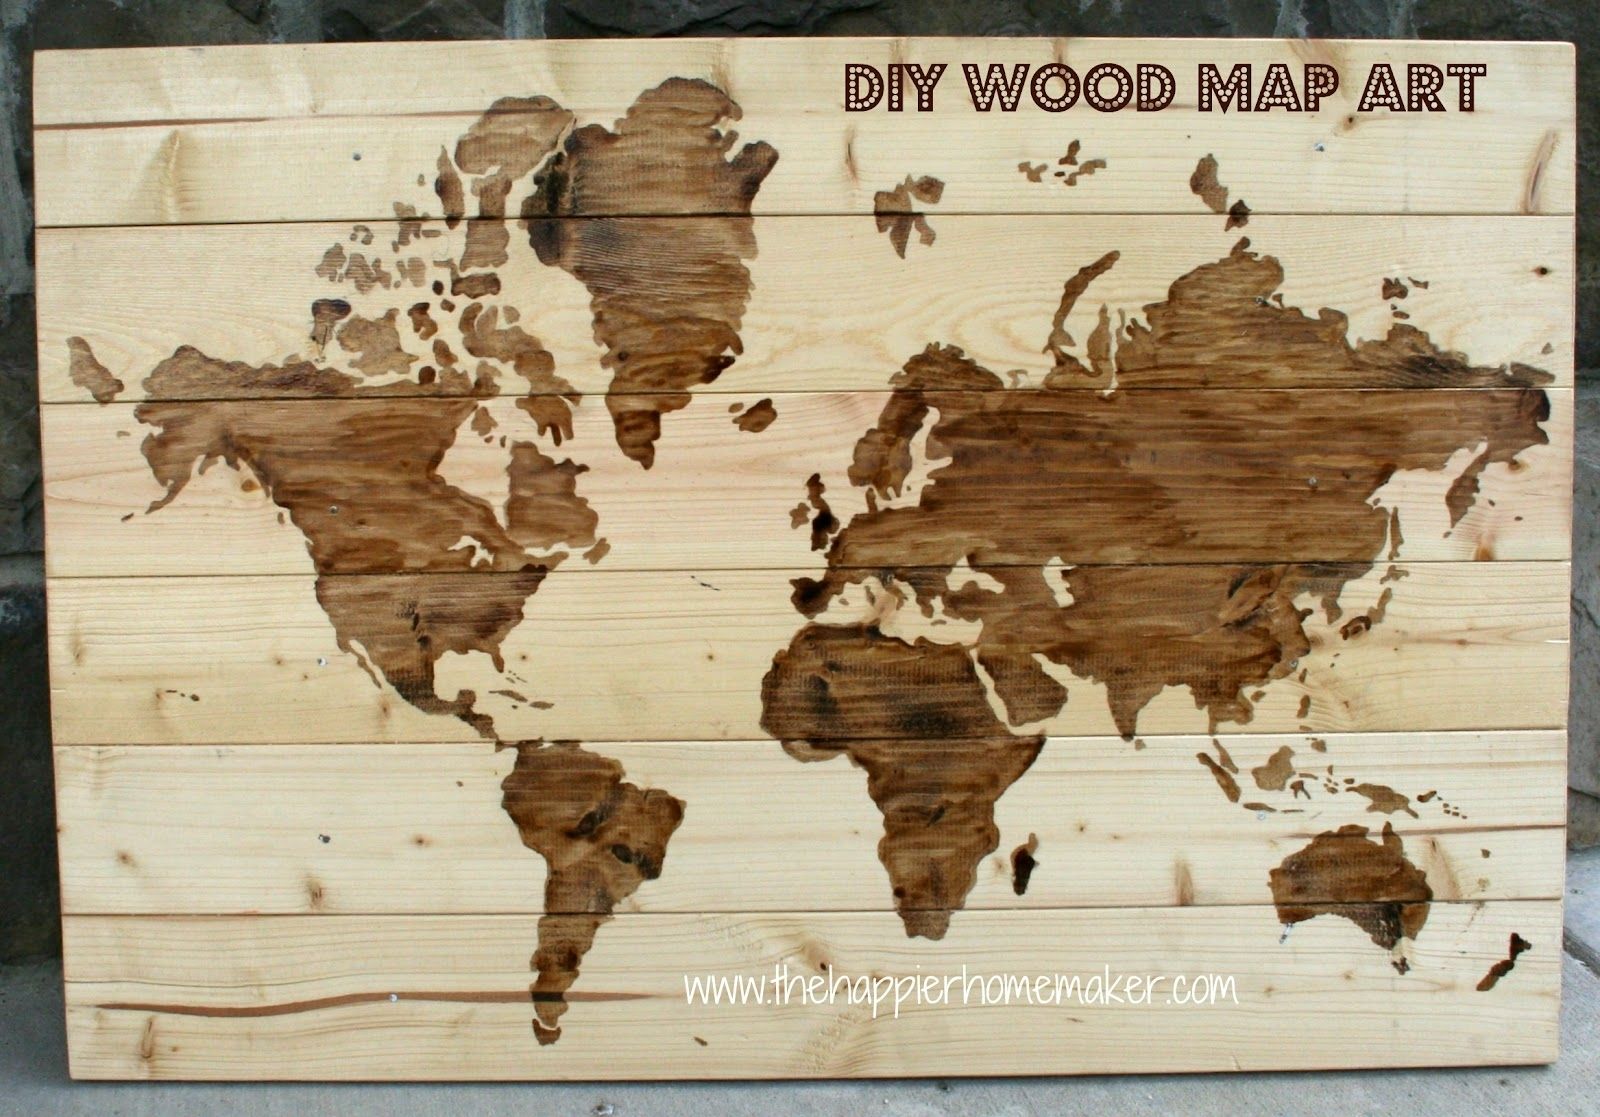 Diy Wooden World Map Art | The Happier Homemaker Throughout Wood Map Wall Art (View 18 of 20)